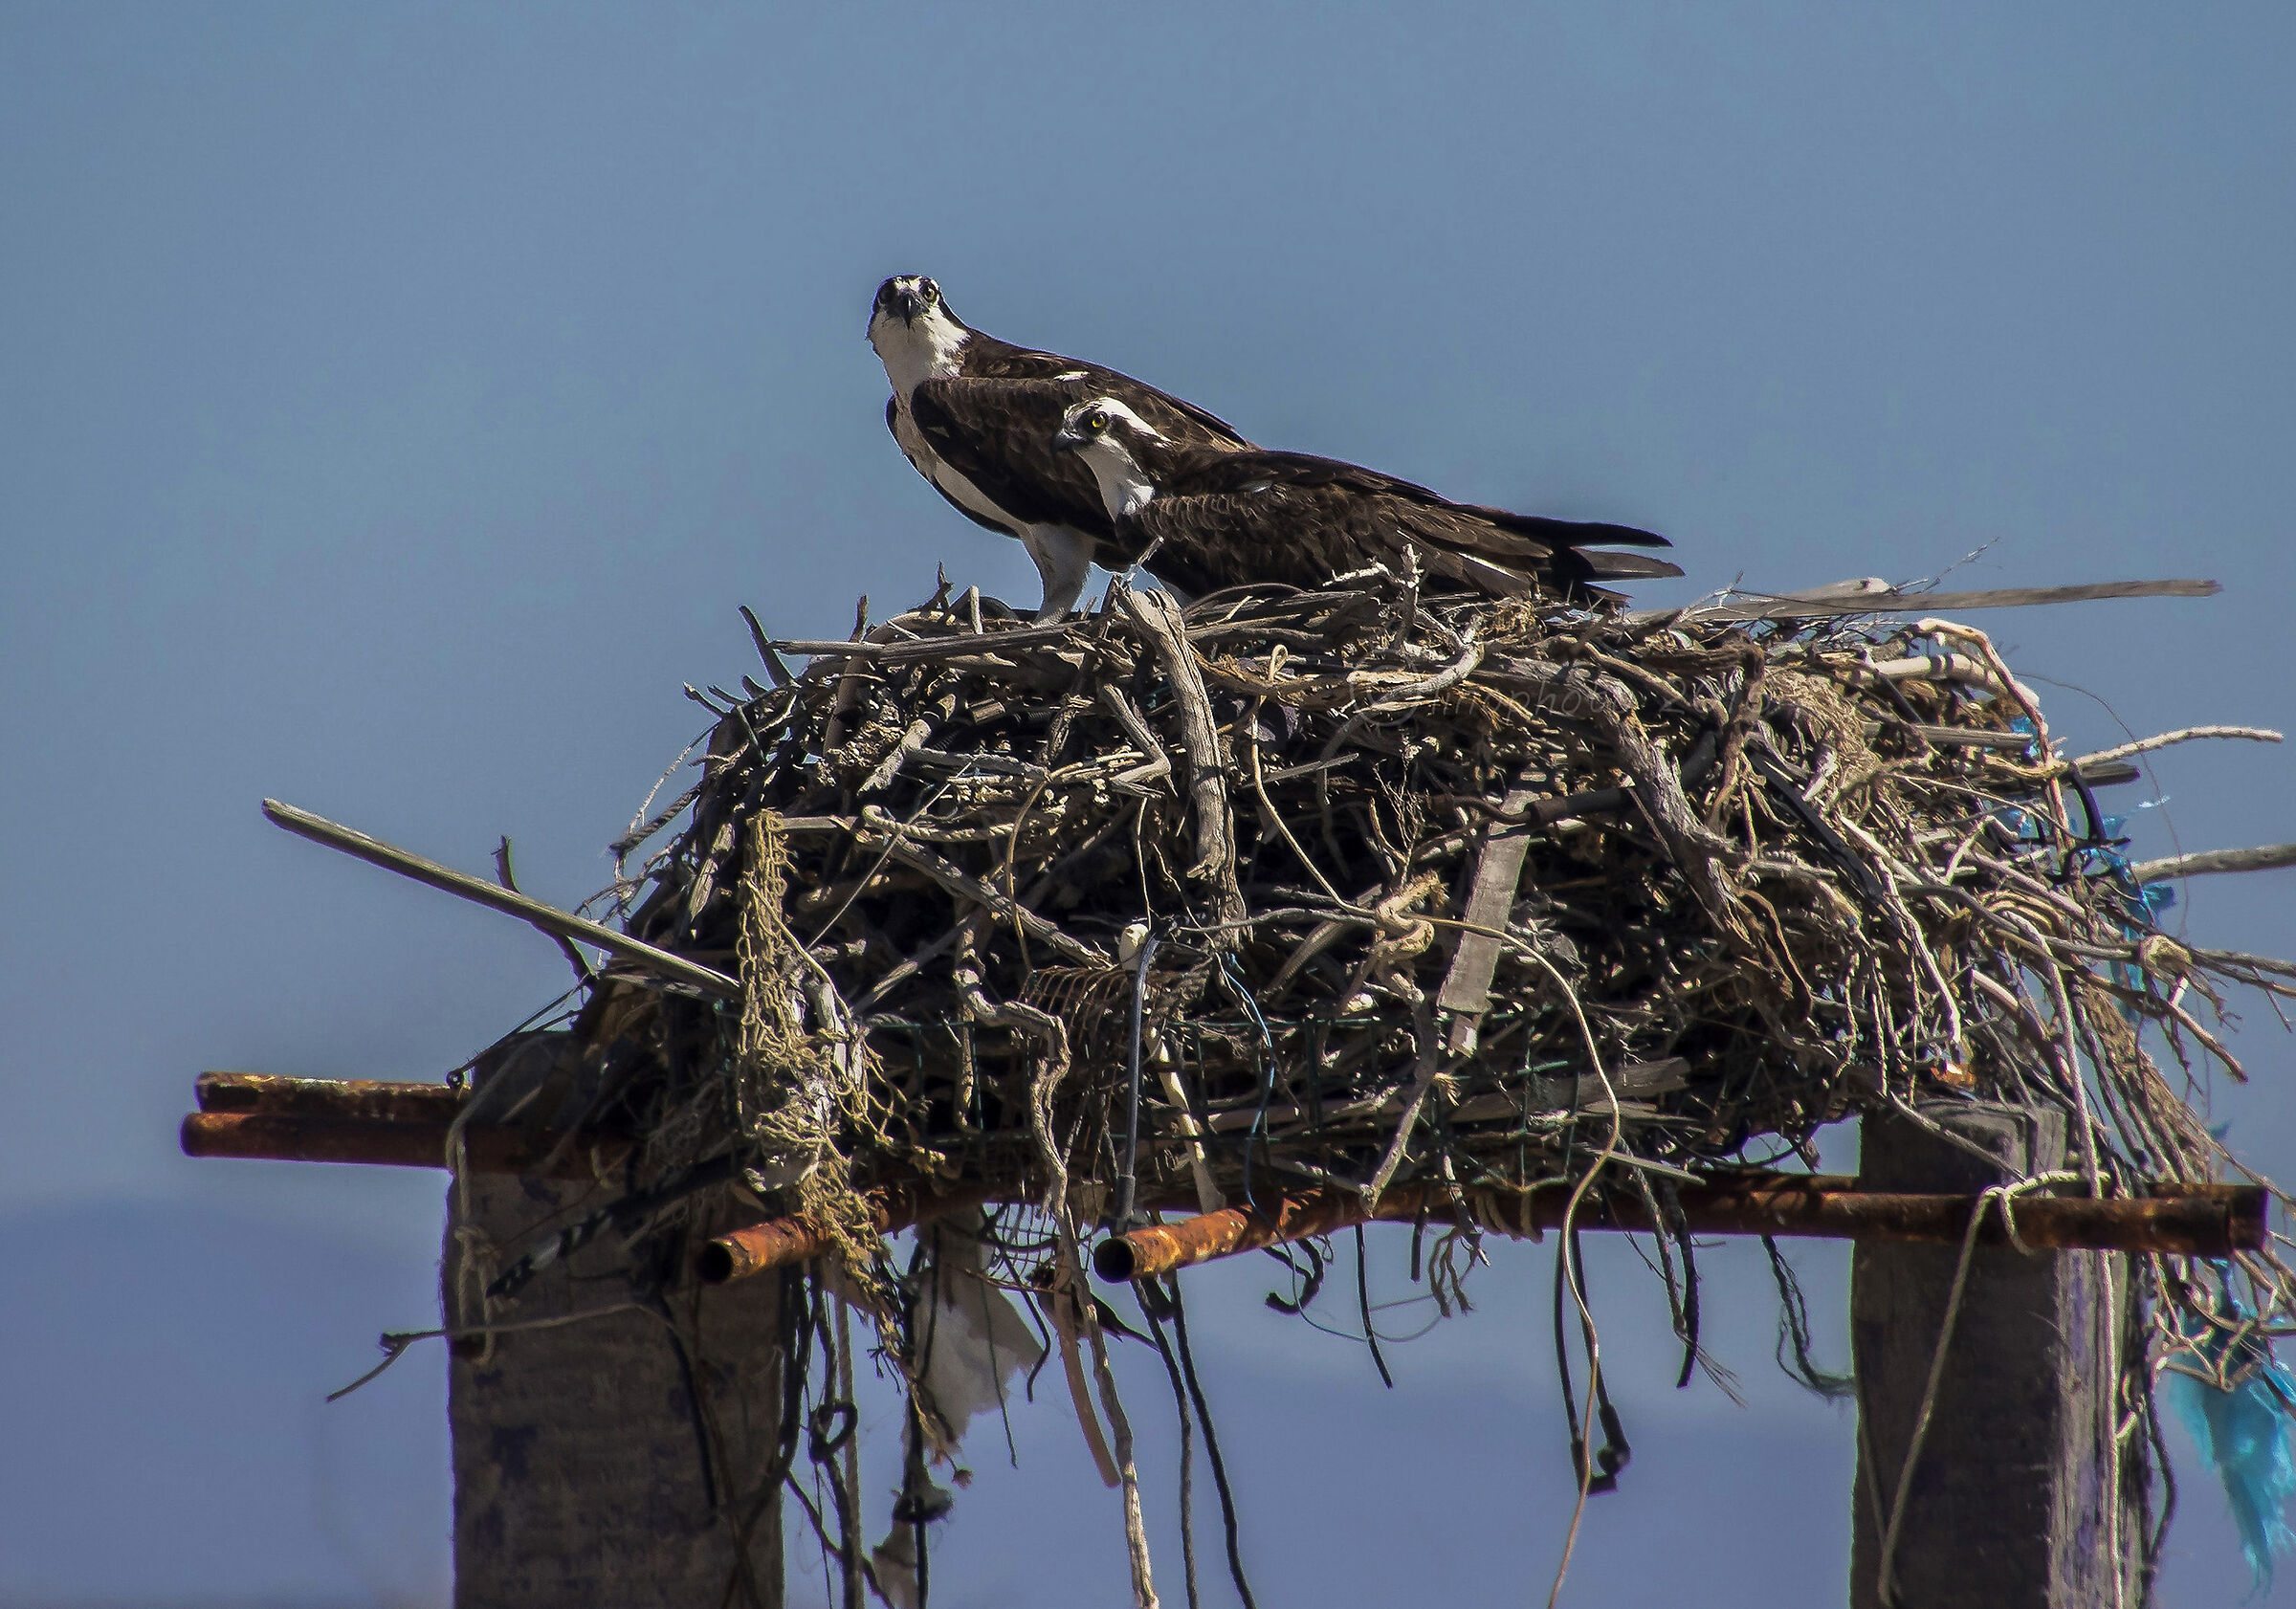 Ospreys pair at the nest...